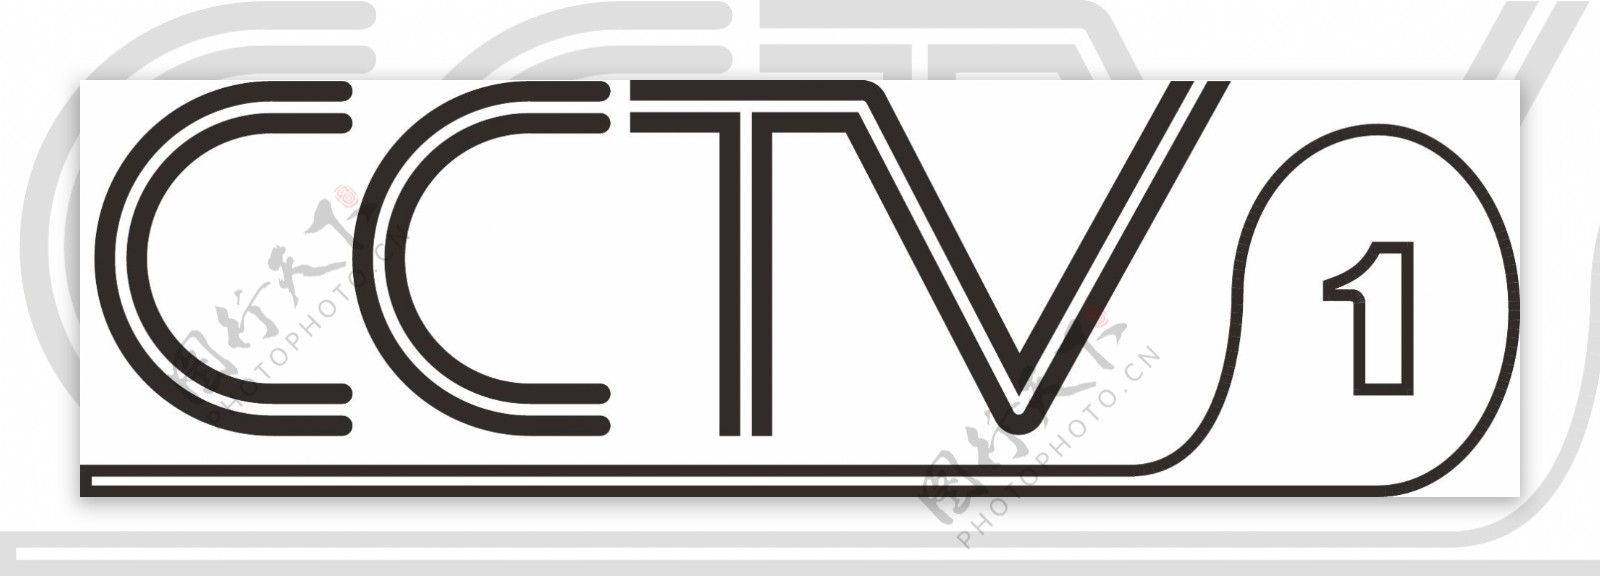 cctv1台标logo